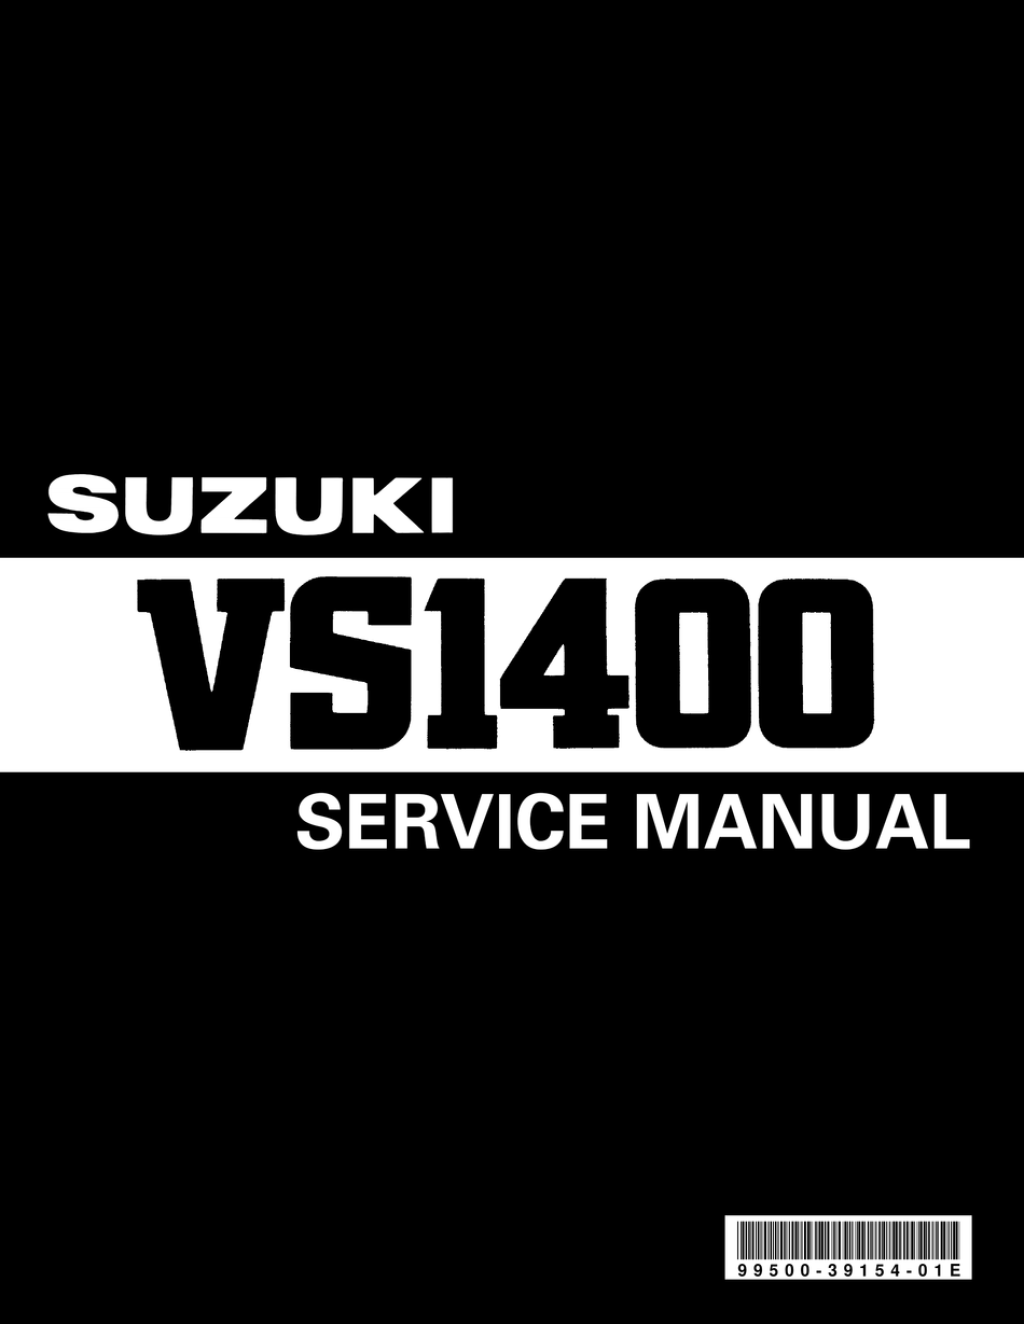 suzuki intruder vs1400 service manual - SUZUKI INTRUDER VS SERVICE MANUAL Pdf Download  ManualsLib